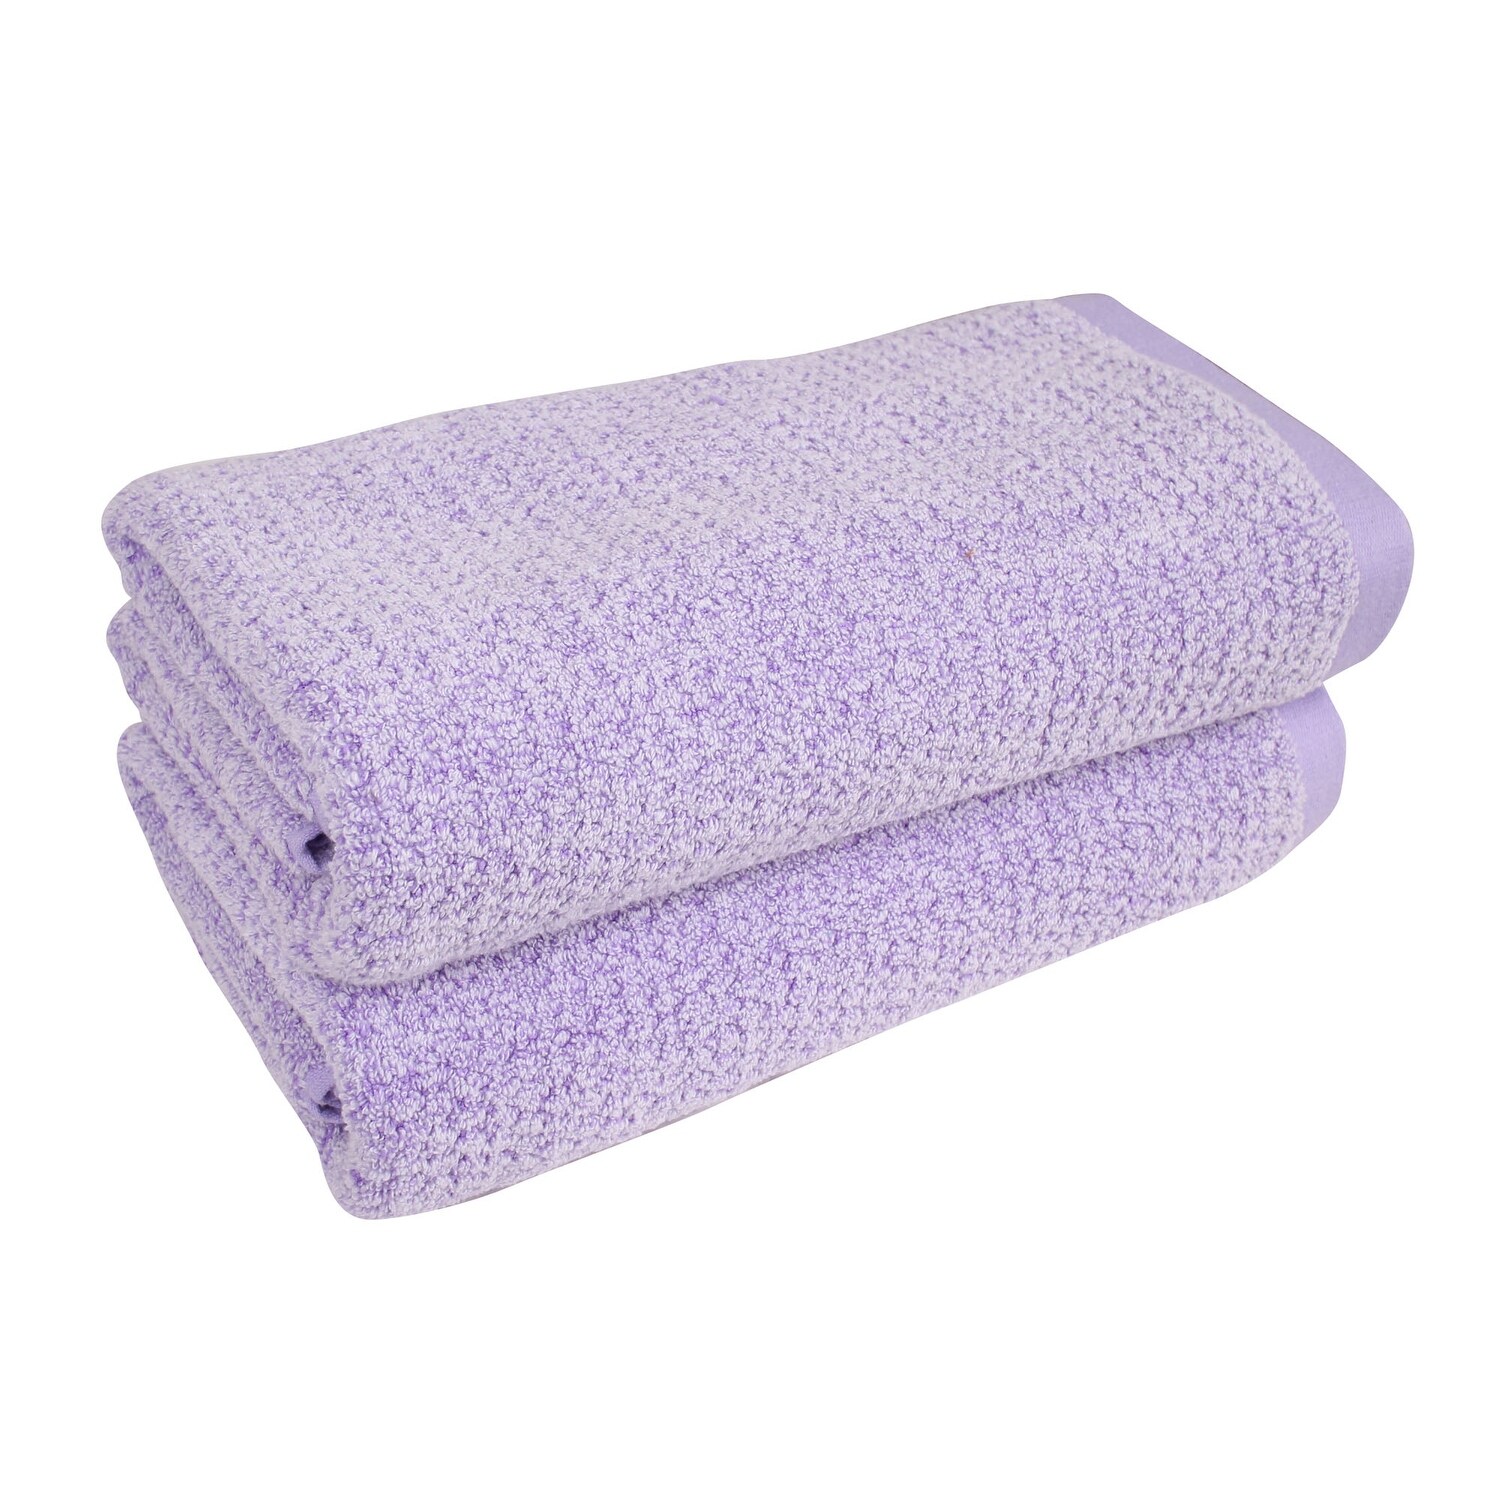 Everplush Diamond Jacquard Performance Core Bath Towel - Bed Bath & Beyond  - 11817264